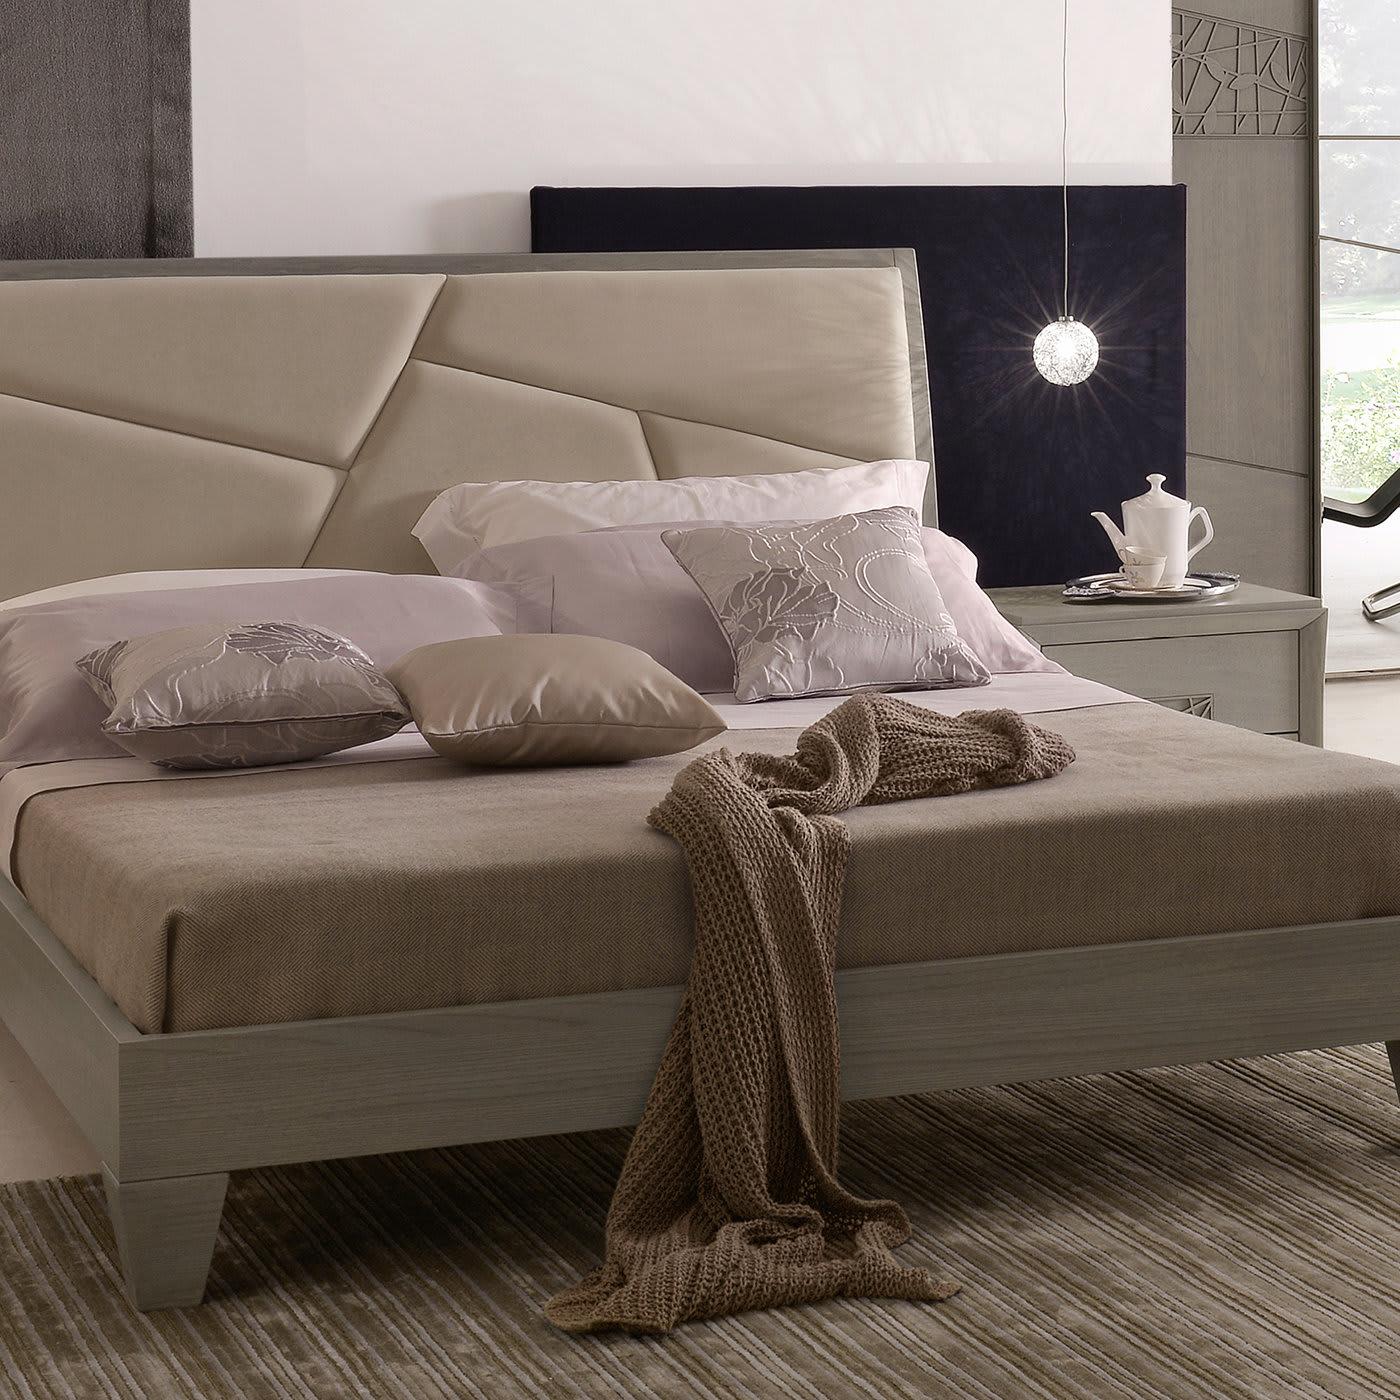 Italian Mondrian Bed For Sale